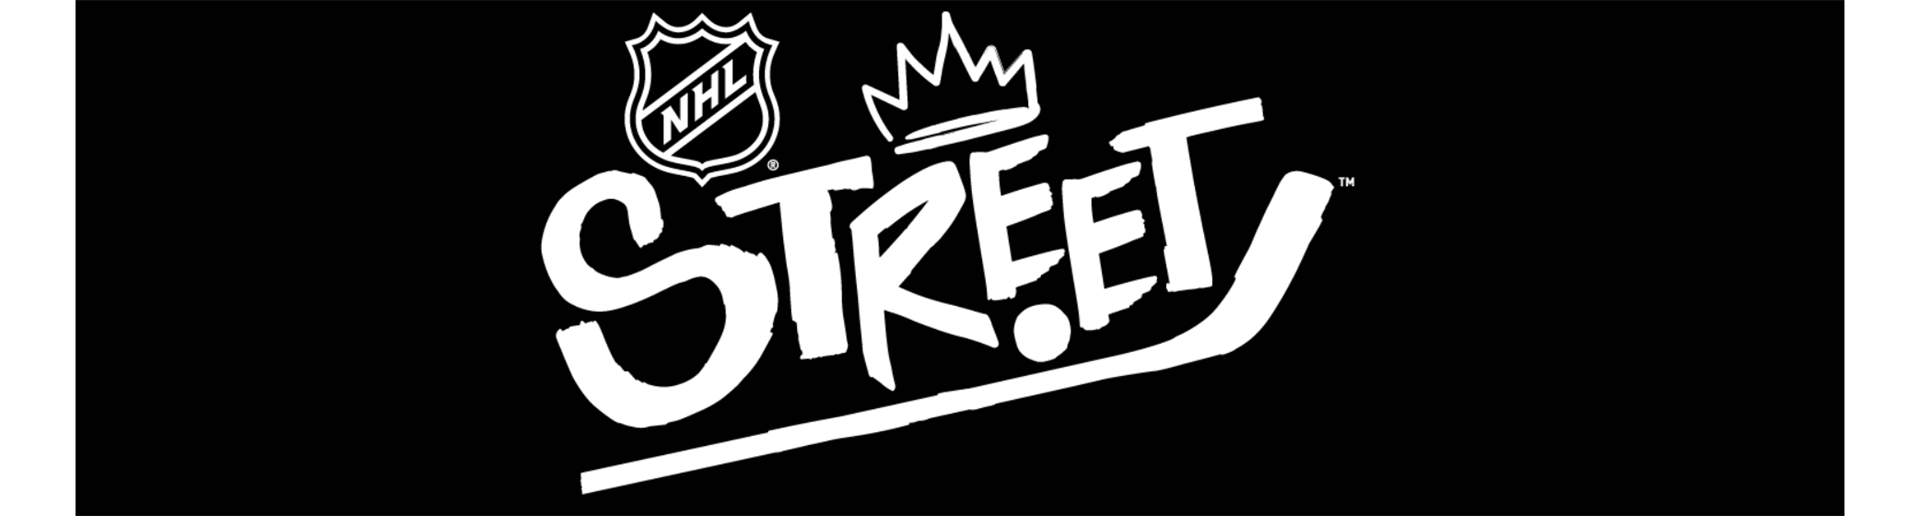 NHL Street Summer League Starts Soon